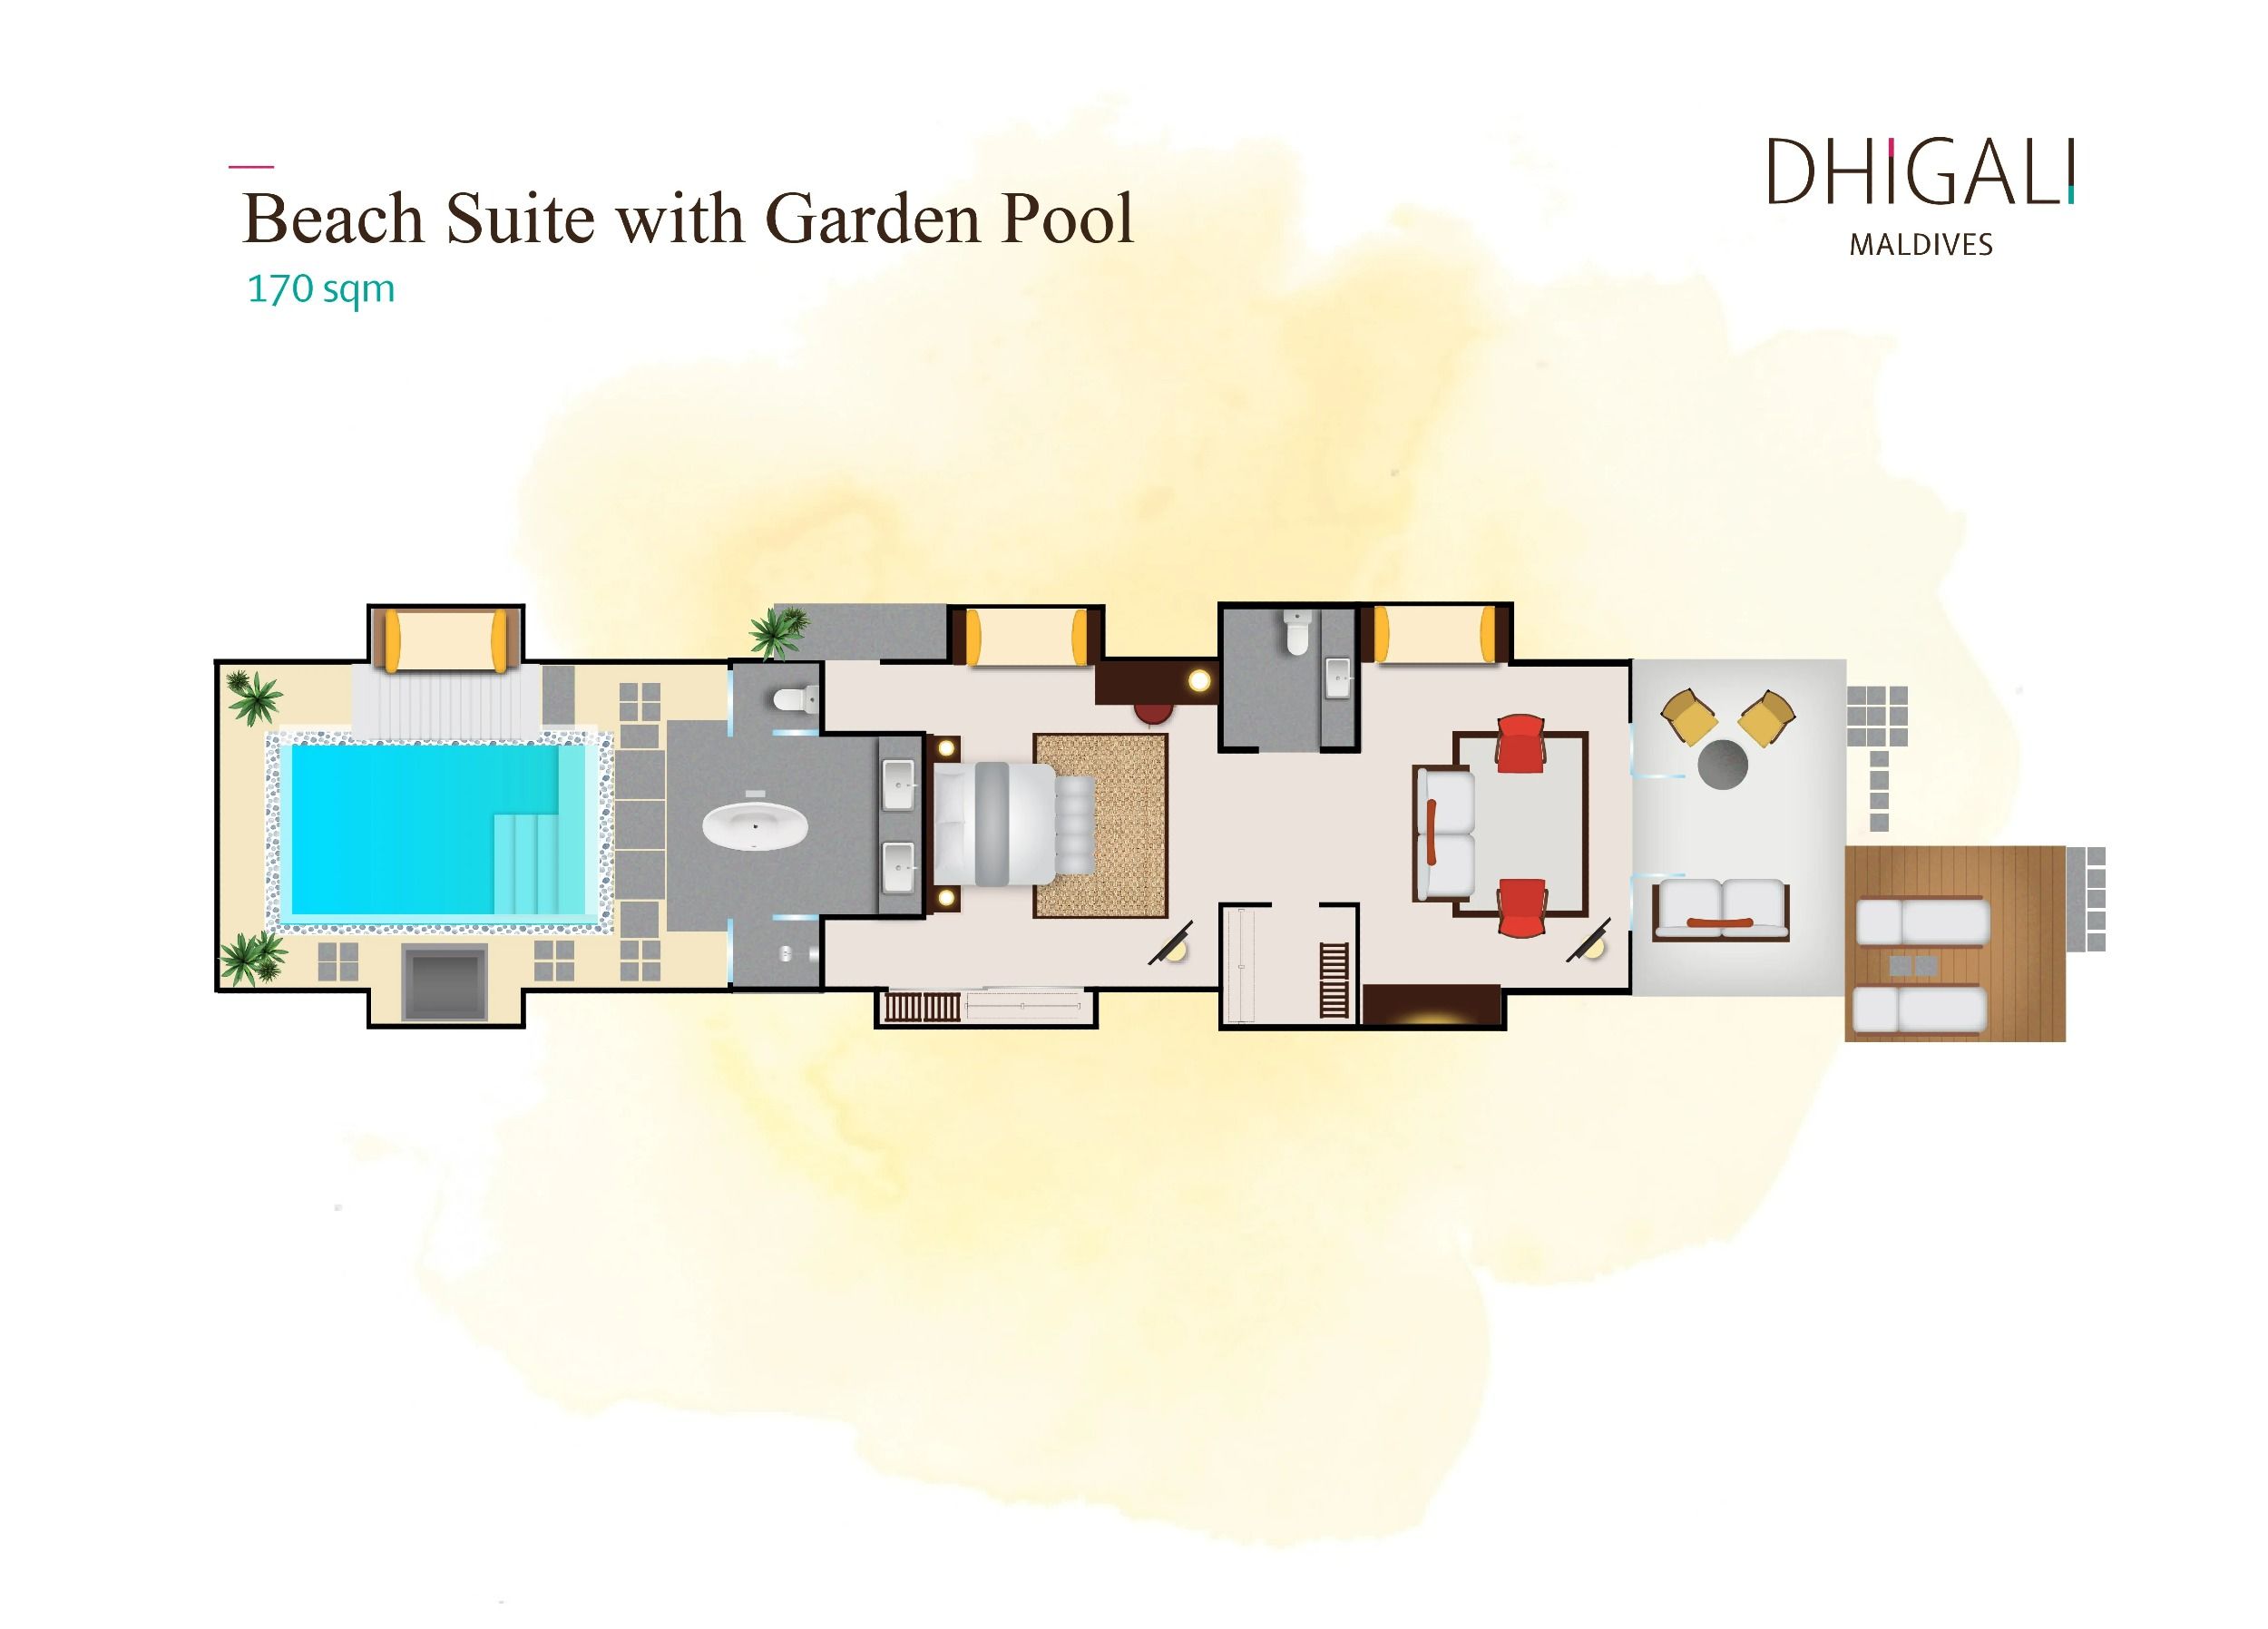 Beach Suite with Garden Pool -Floorplan- Dhigali Maldives